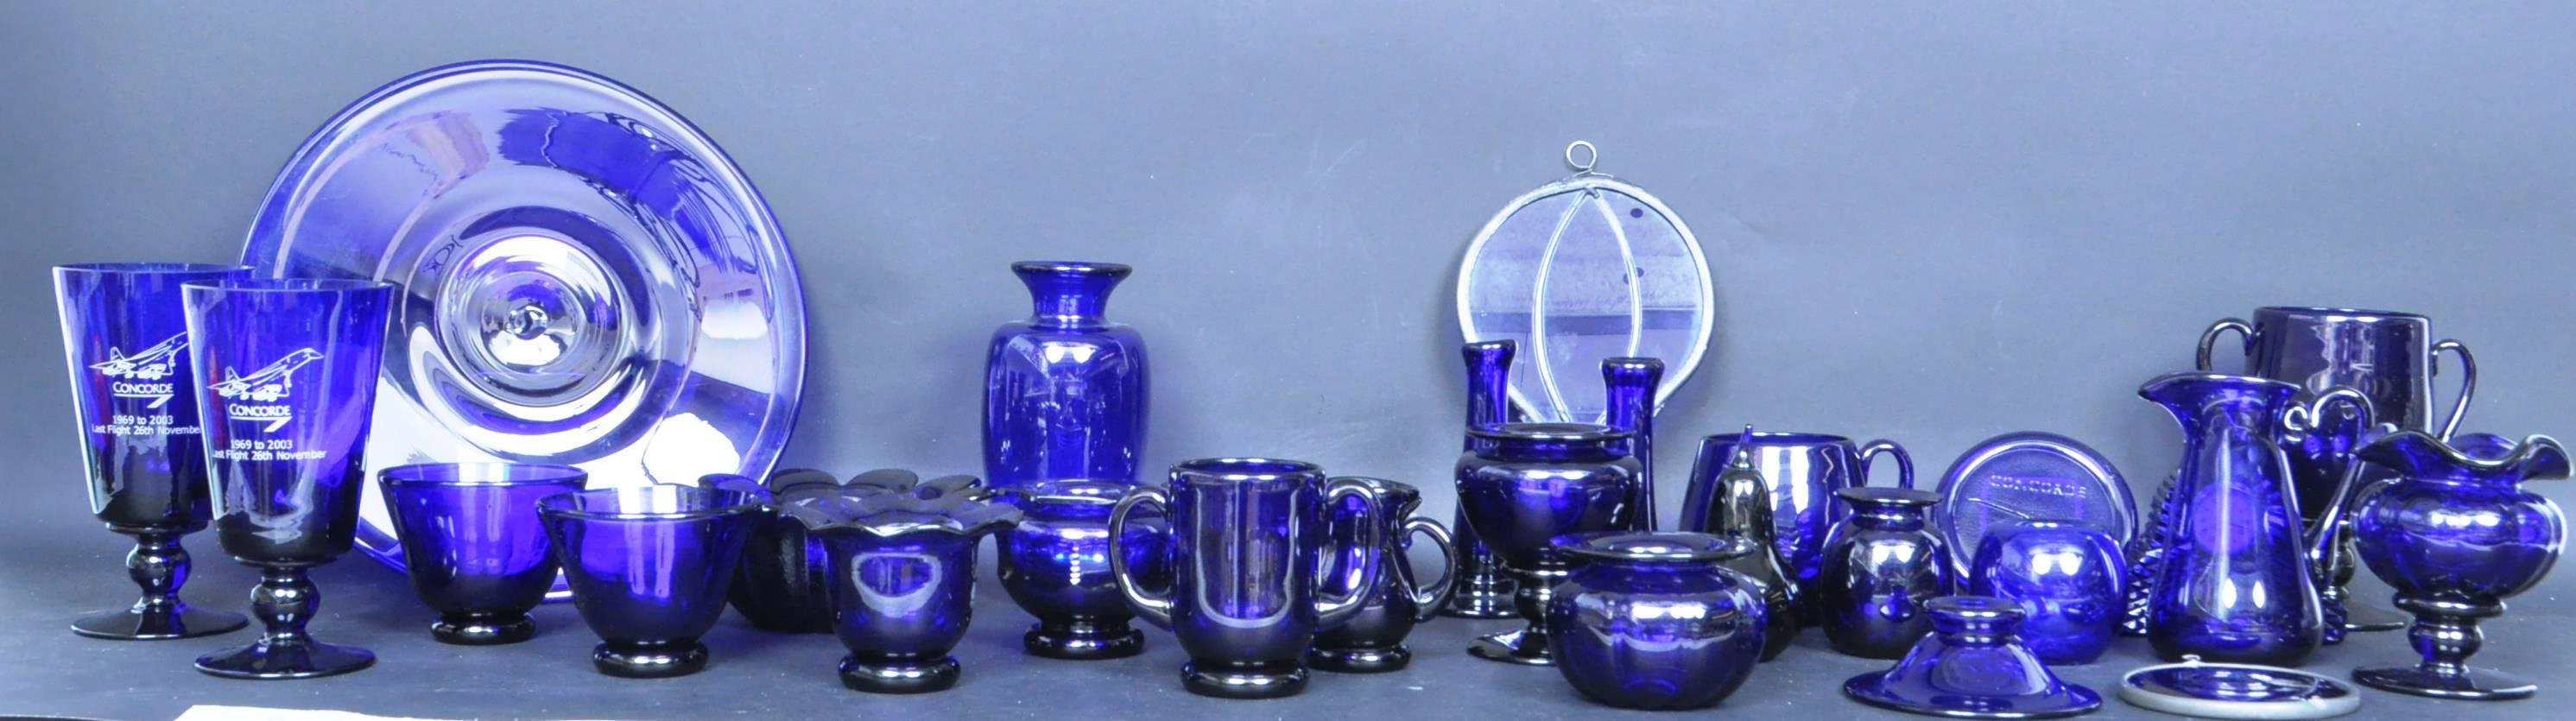 LARGE ASSORTMENT OF BRISTOL BLUE COBALT GLASS ITEMS - Image 2 of 7